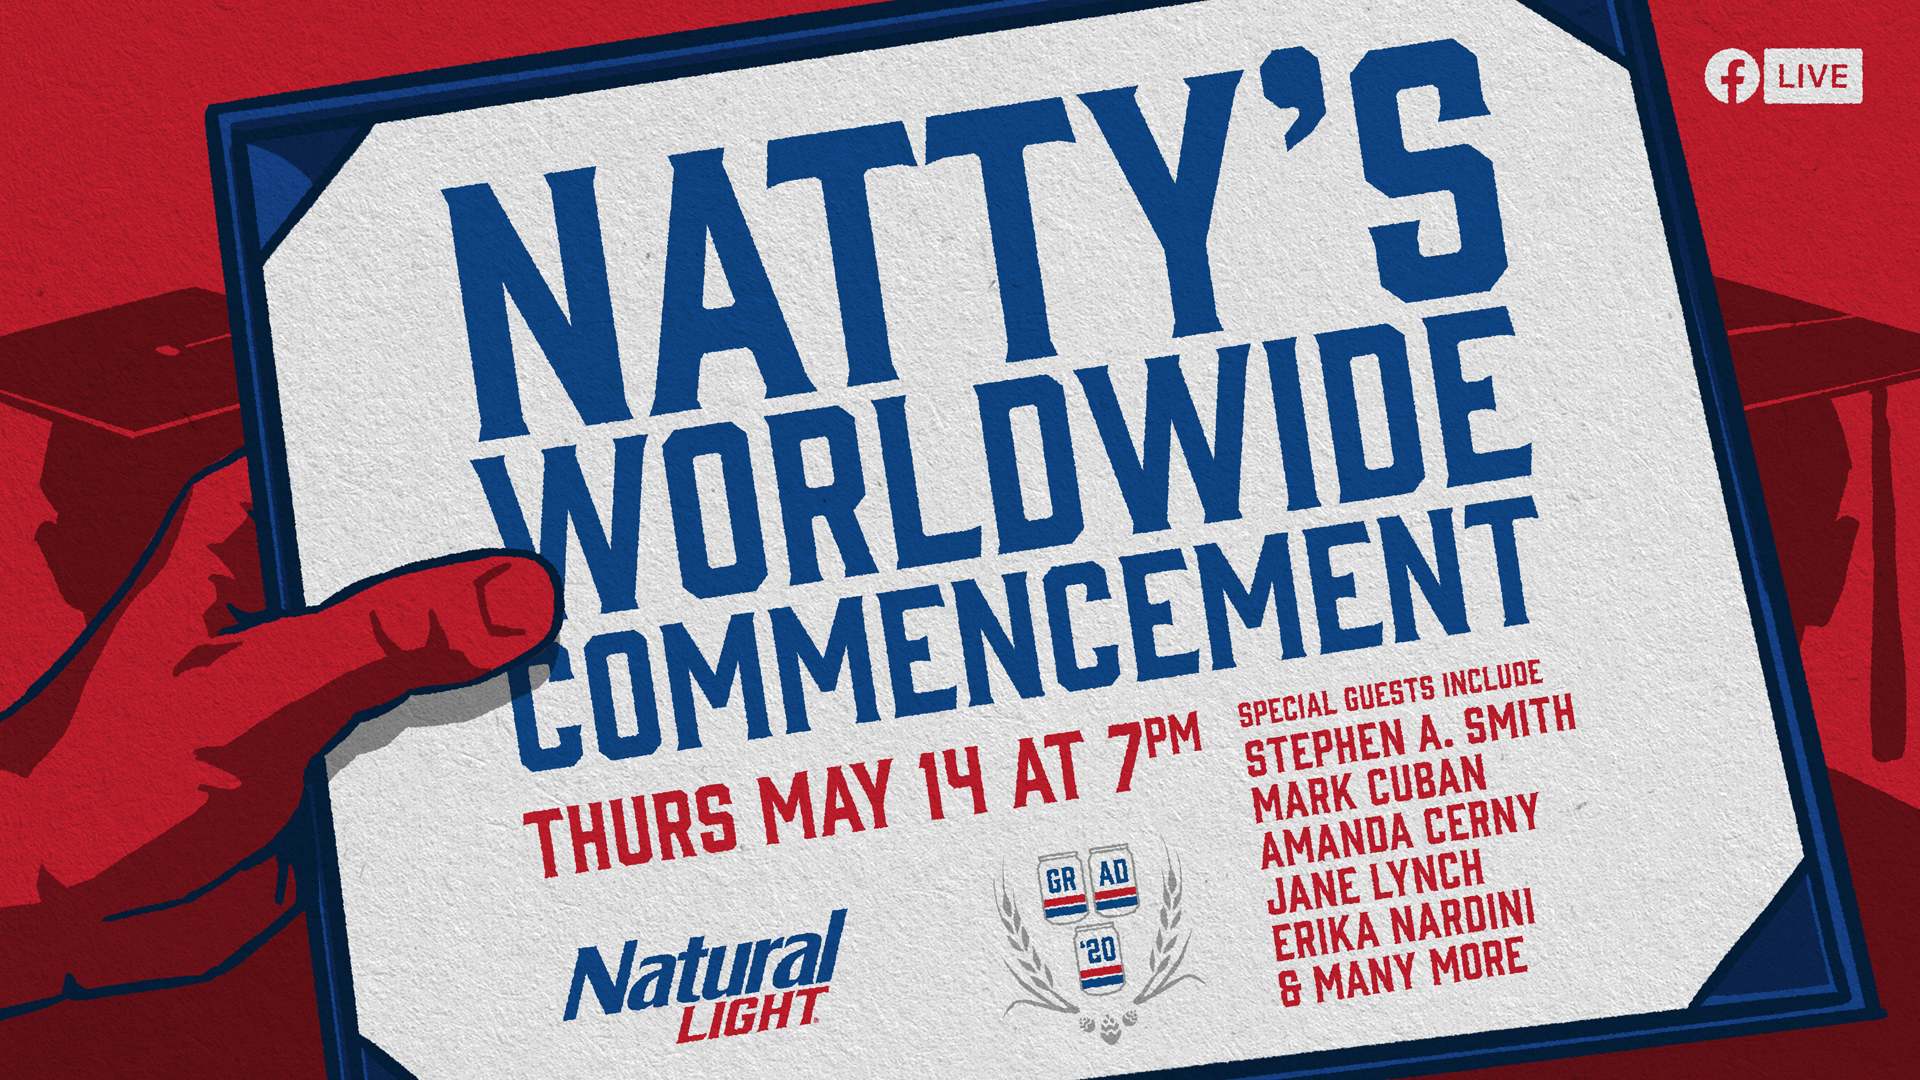 Natty's Worldwide Commencement